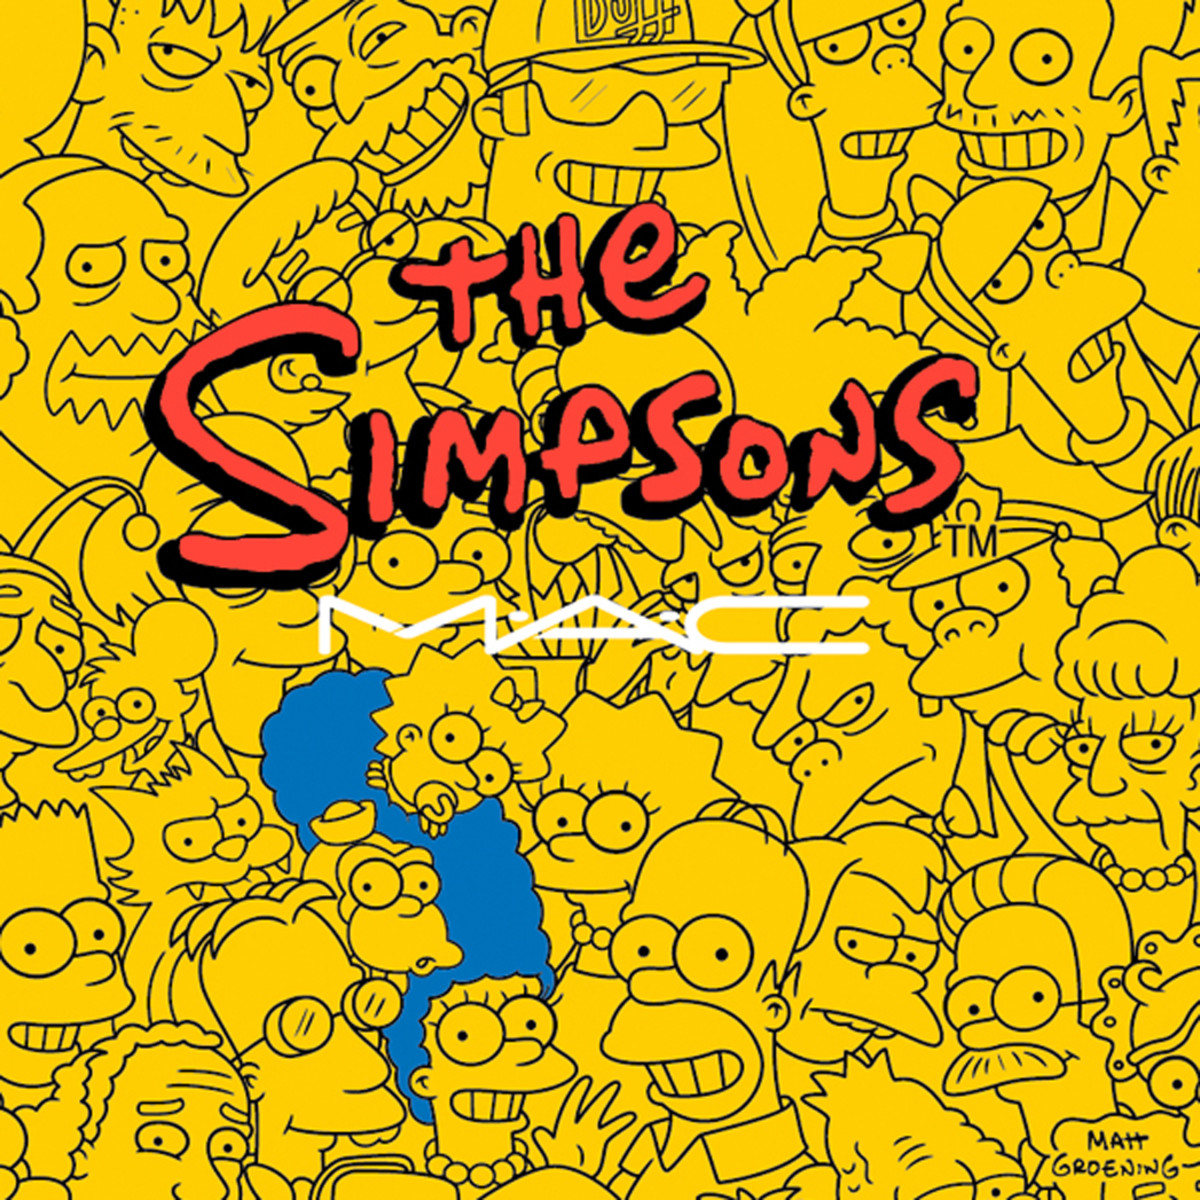 MAC Simpsons art